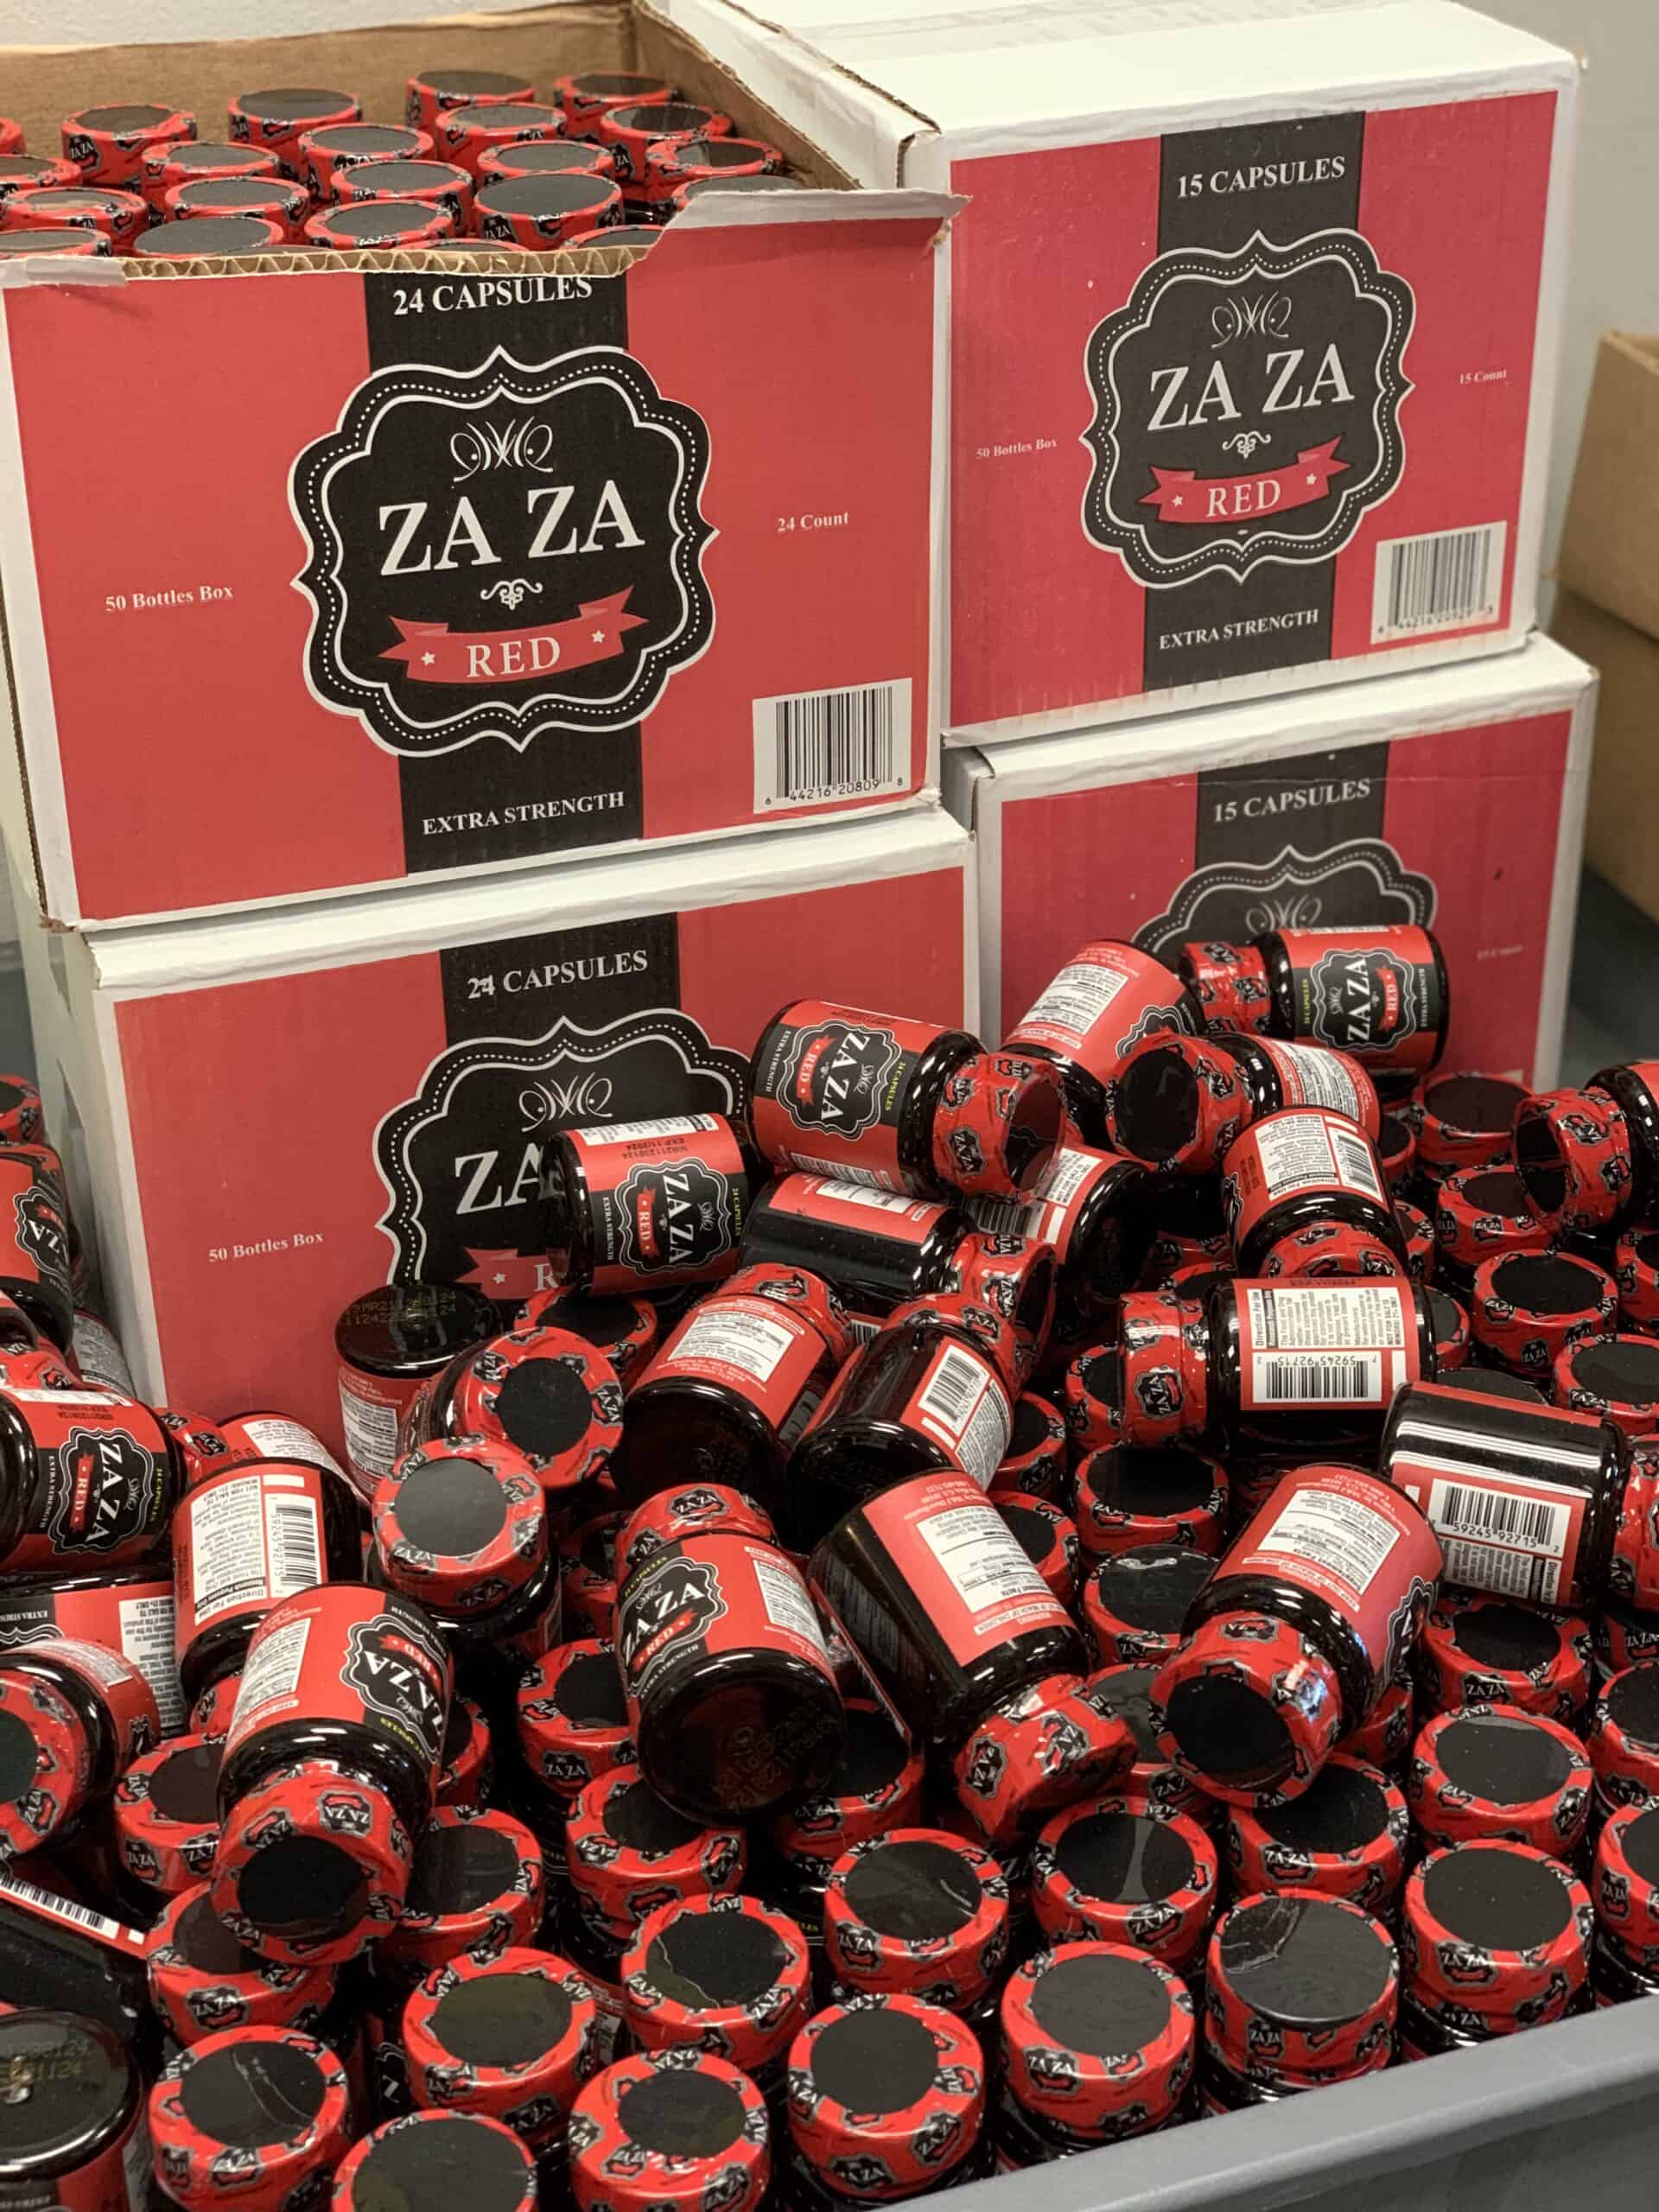 Zaza Red Extra Strength - 24 capsules